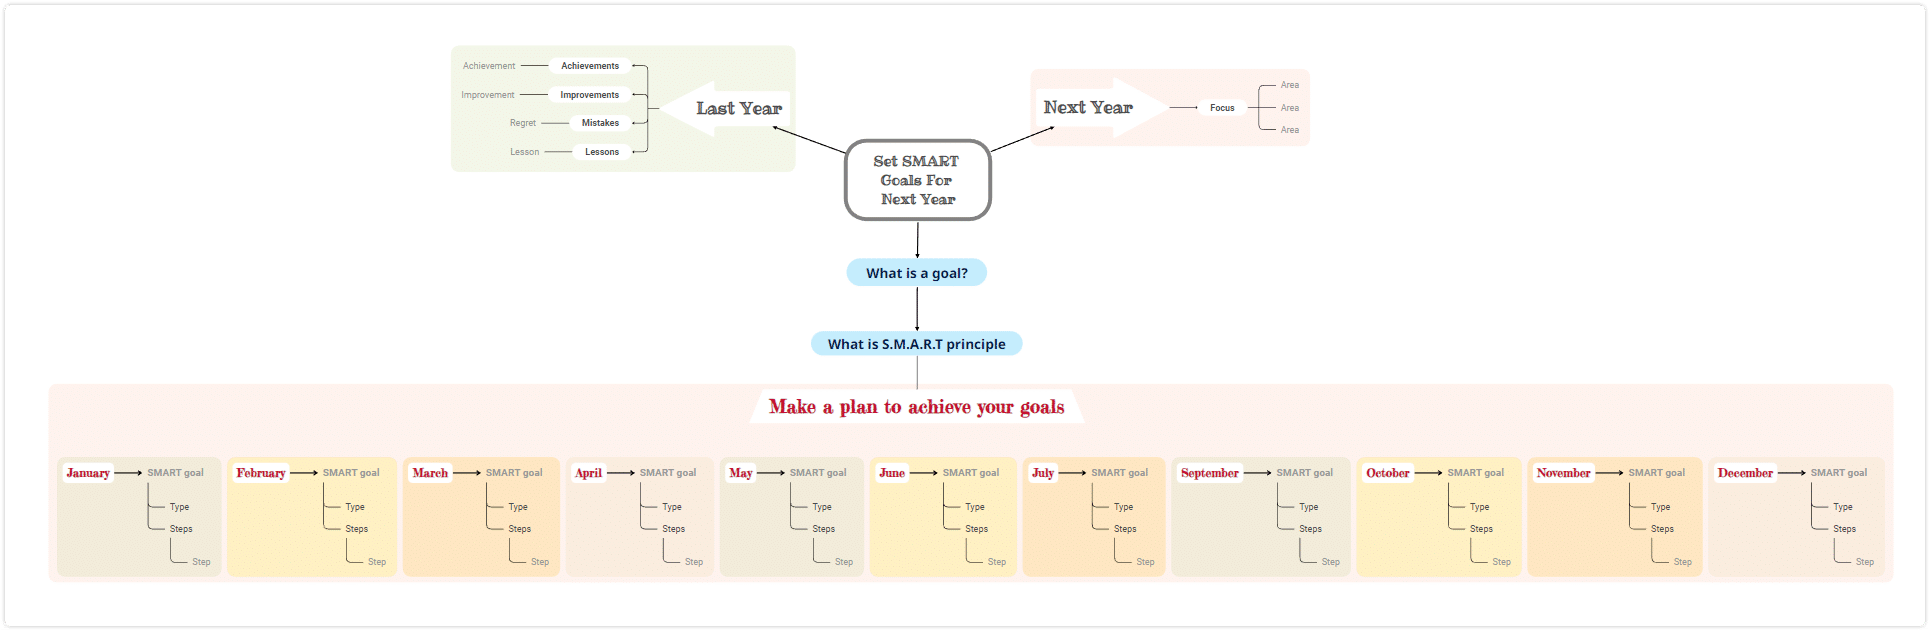 smart goal setting - life map template